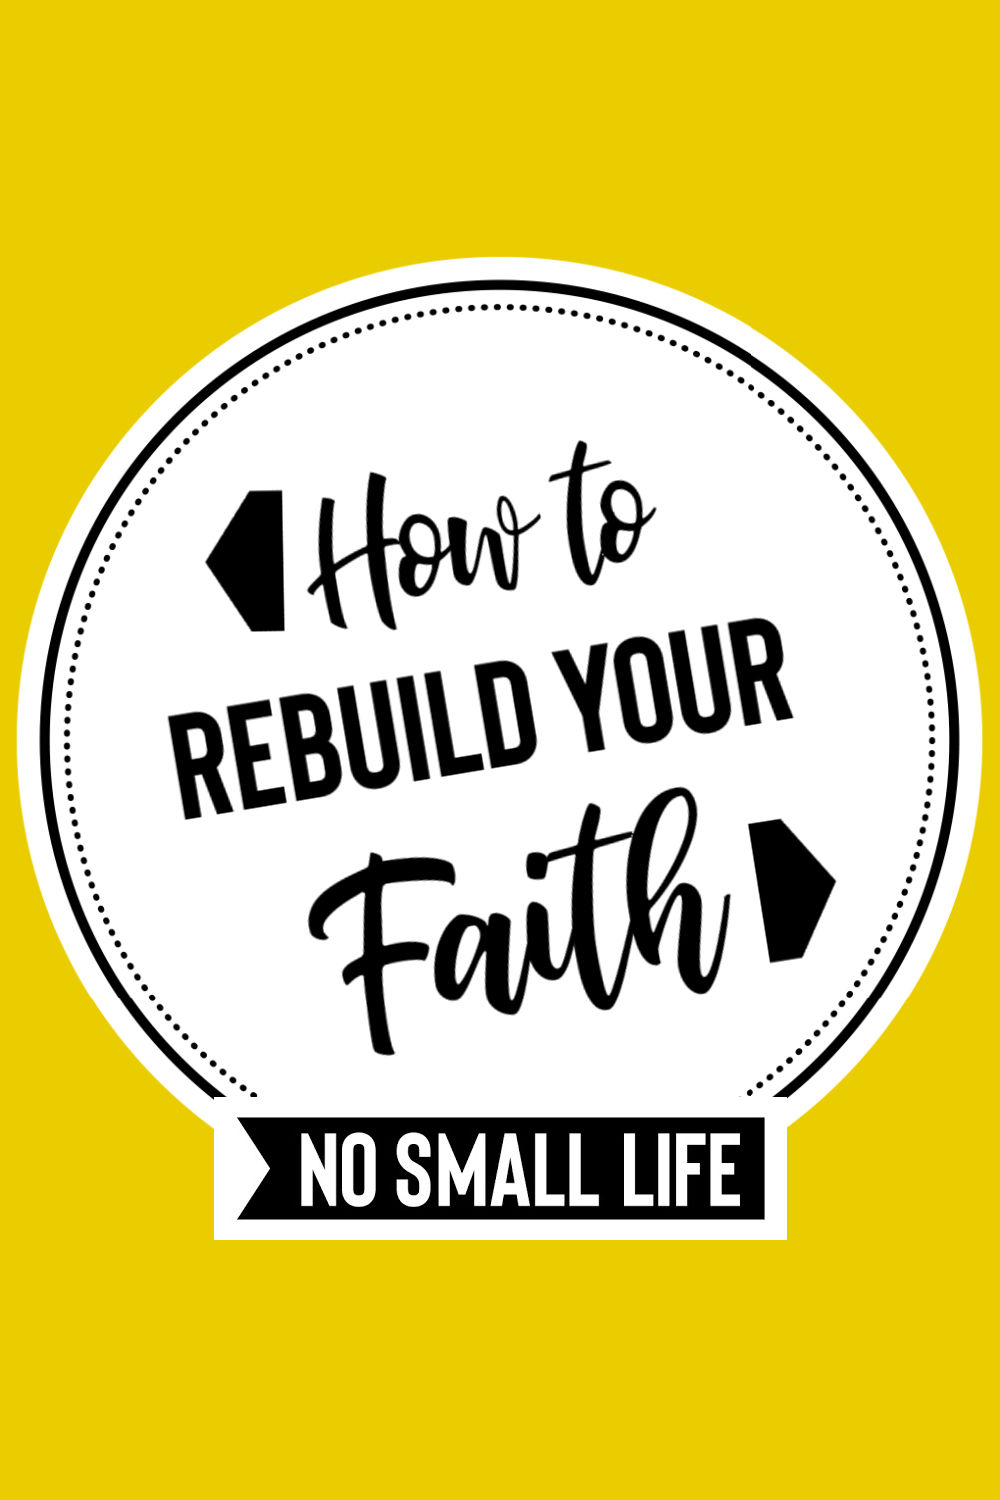 How to Rebuild your Faith